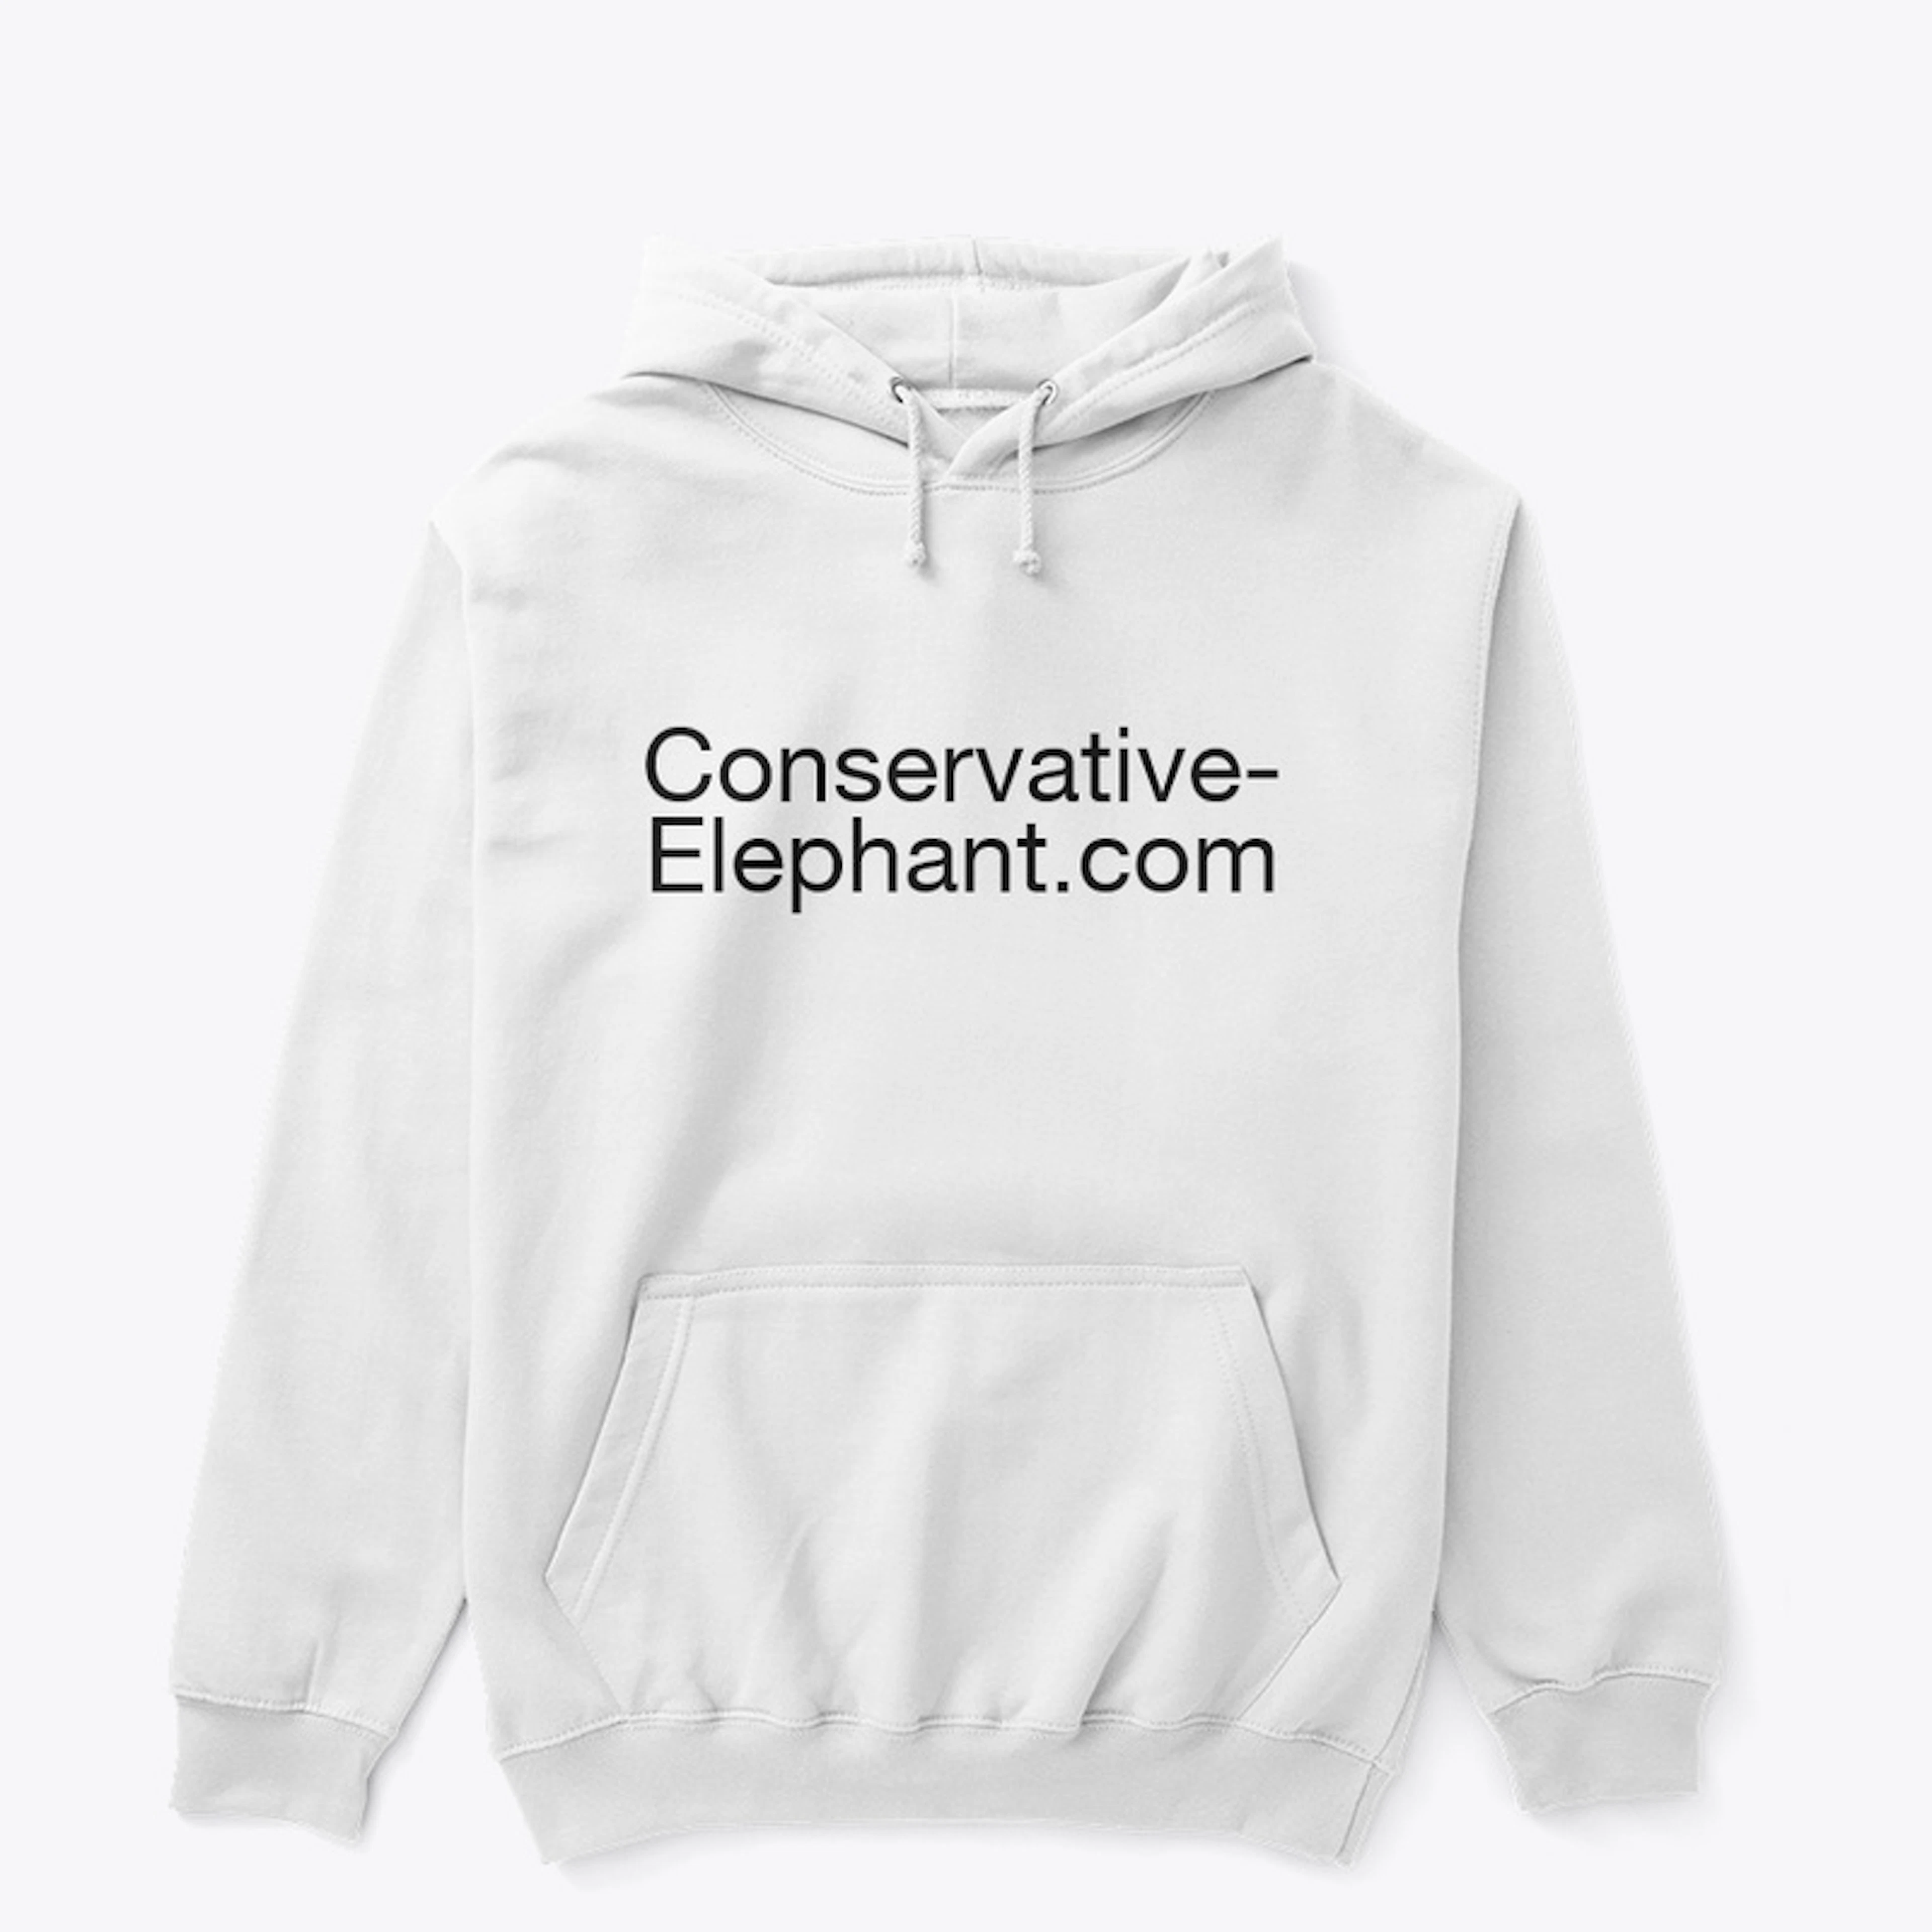 Conservative-Elephant